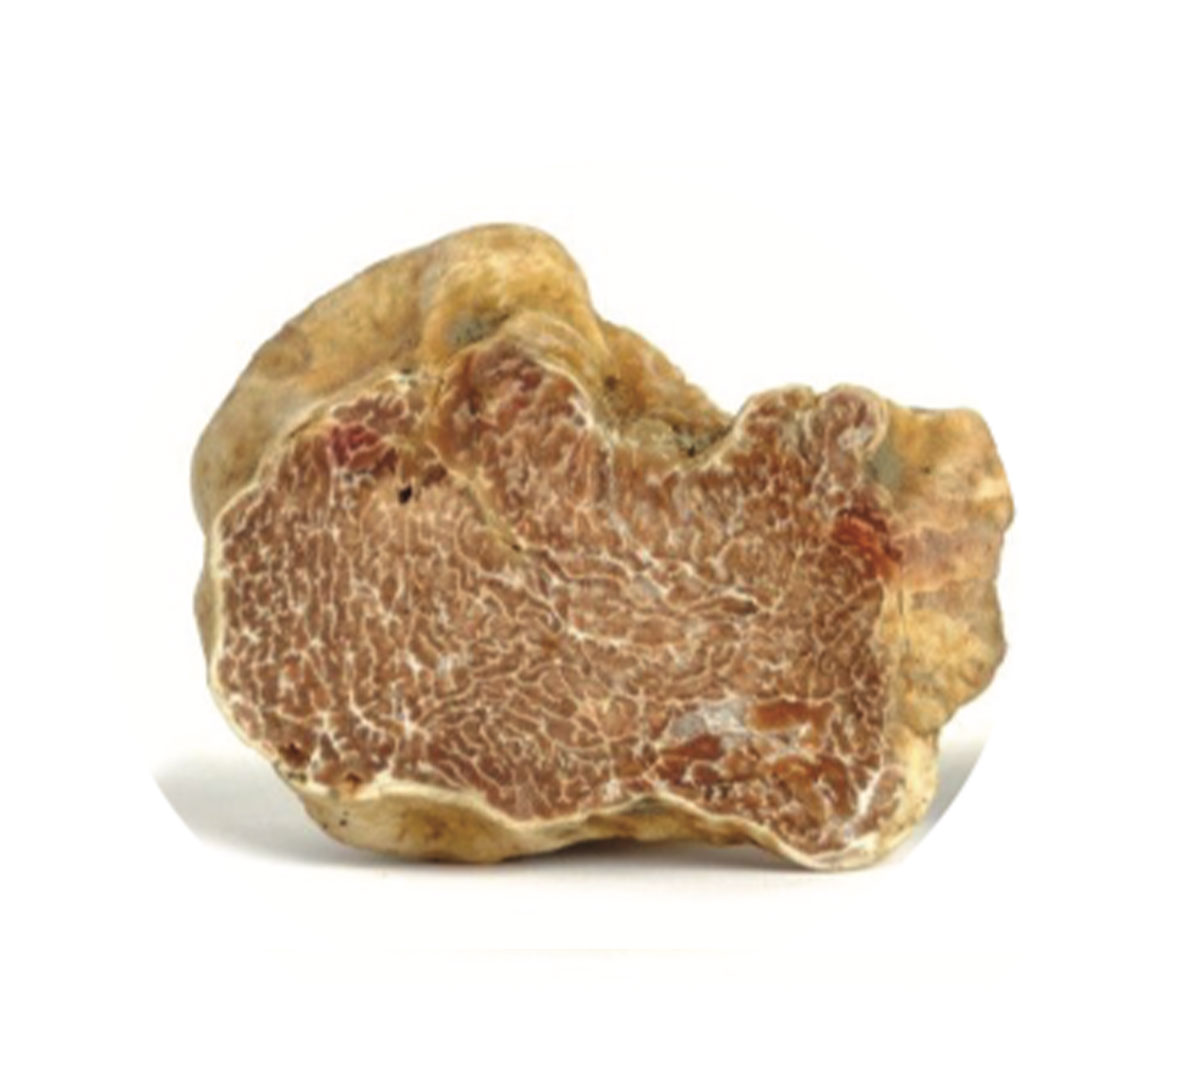 Fresh white truffle